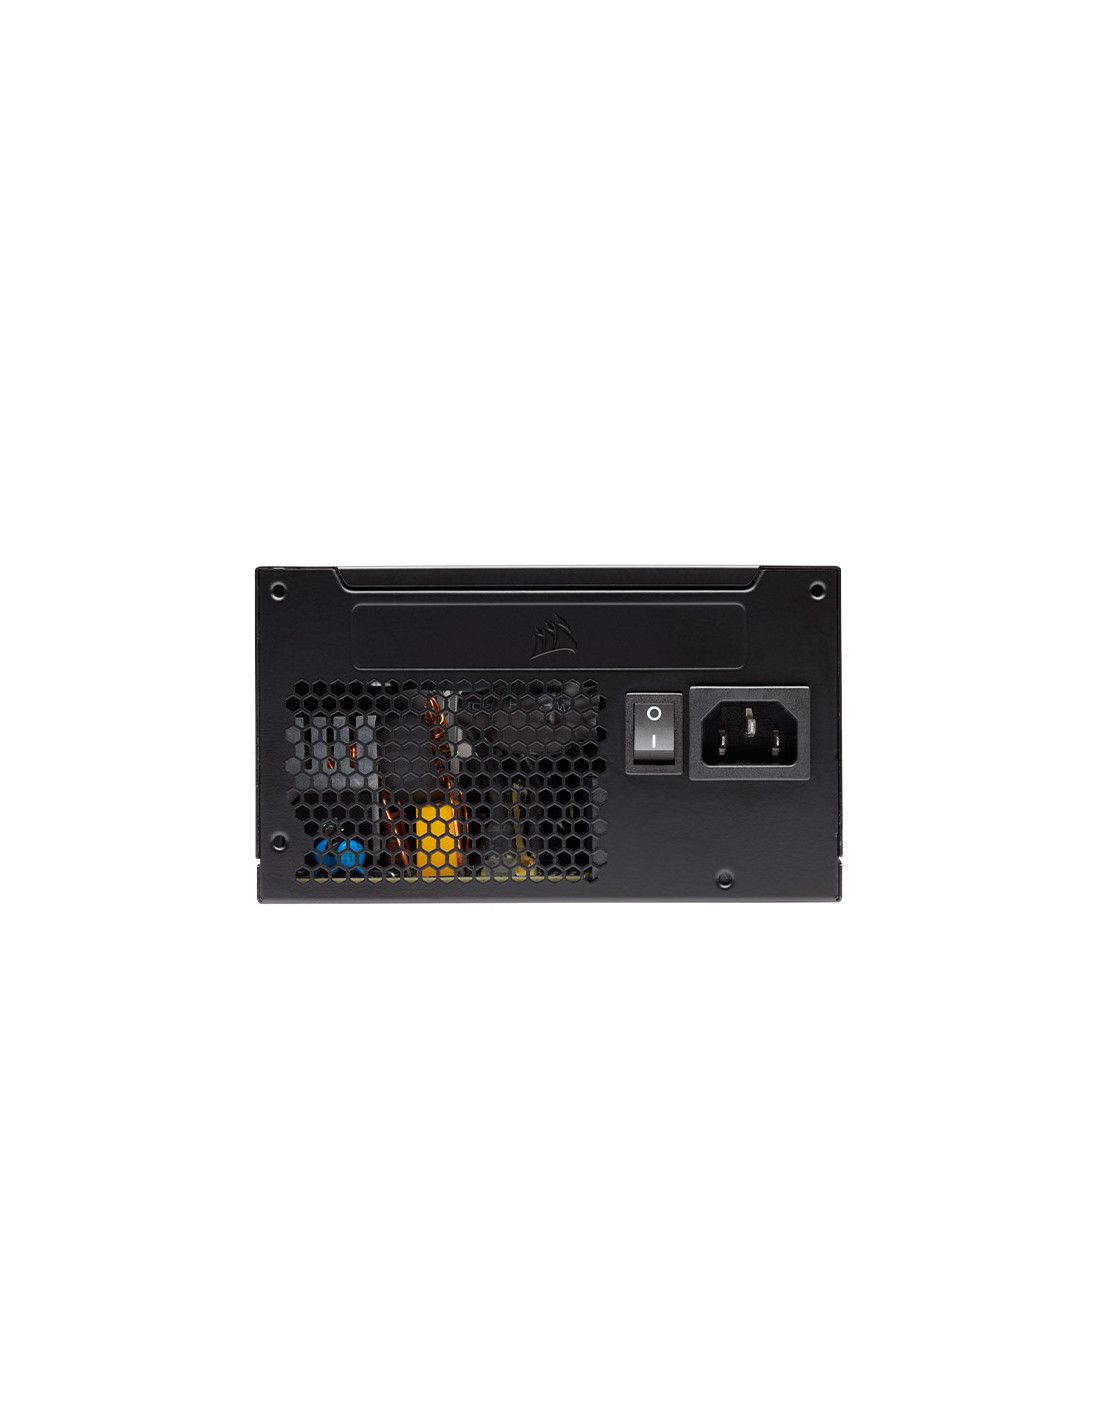 CP-9020279-EU - Fuente Corsair CX750 ATX 750W 120mm 24-pin ATX SATA PCIe 80 Plus Bronze Negra (CP-9020279-EU)